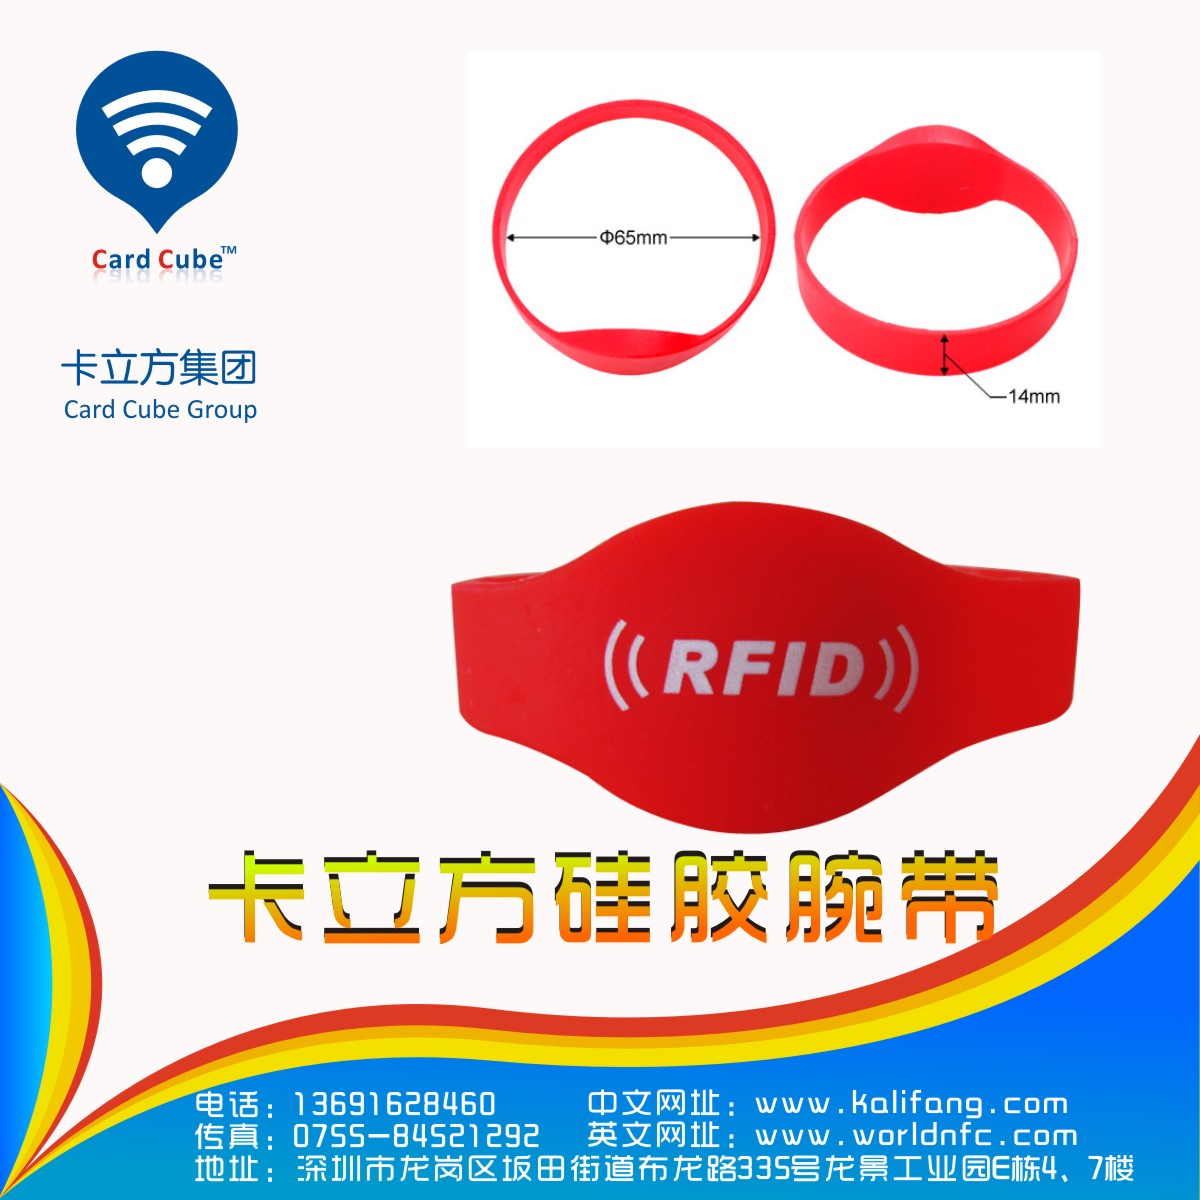 卡立方rfid腕带手表|硅胶RFID腕带|腕带厂家那里有? 卡立方rfid腕带标签